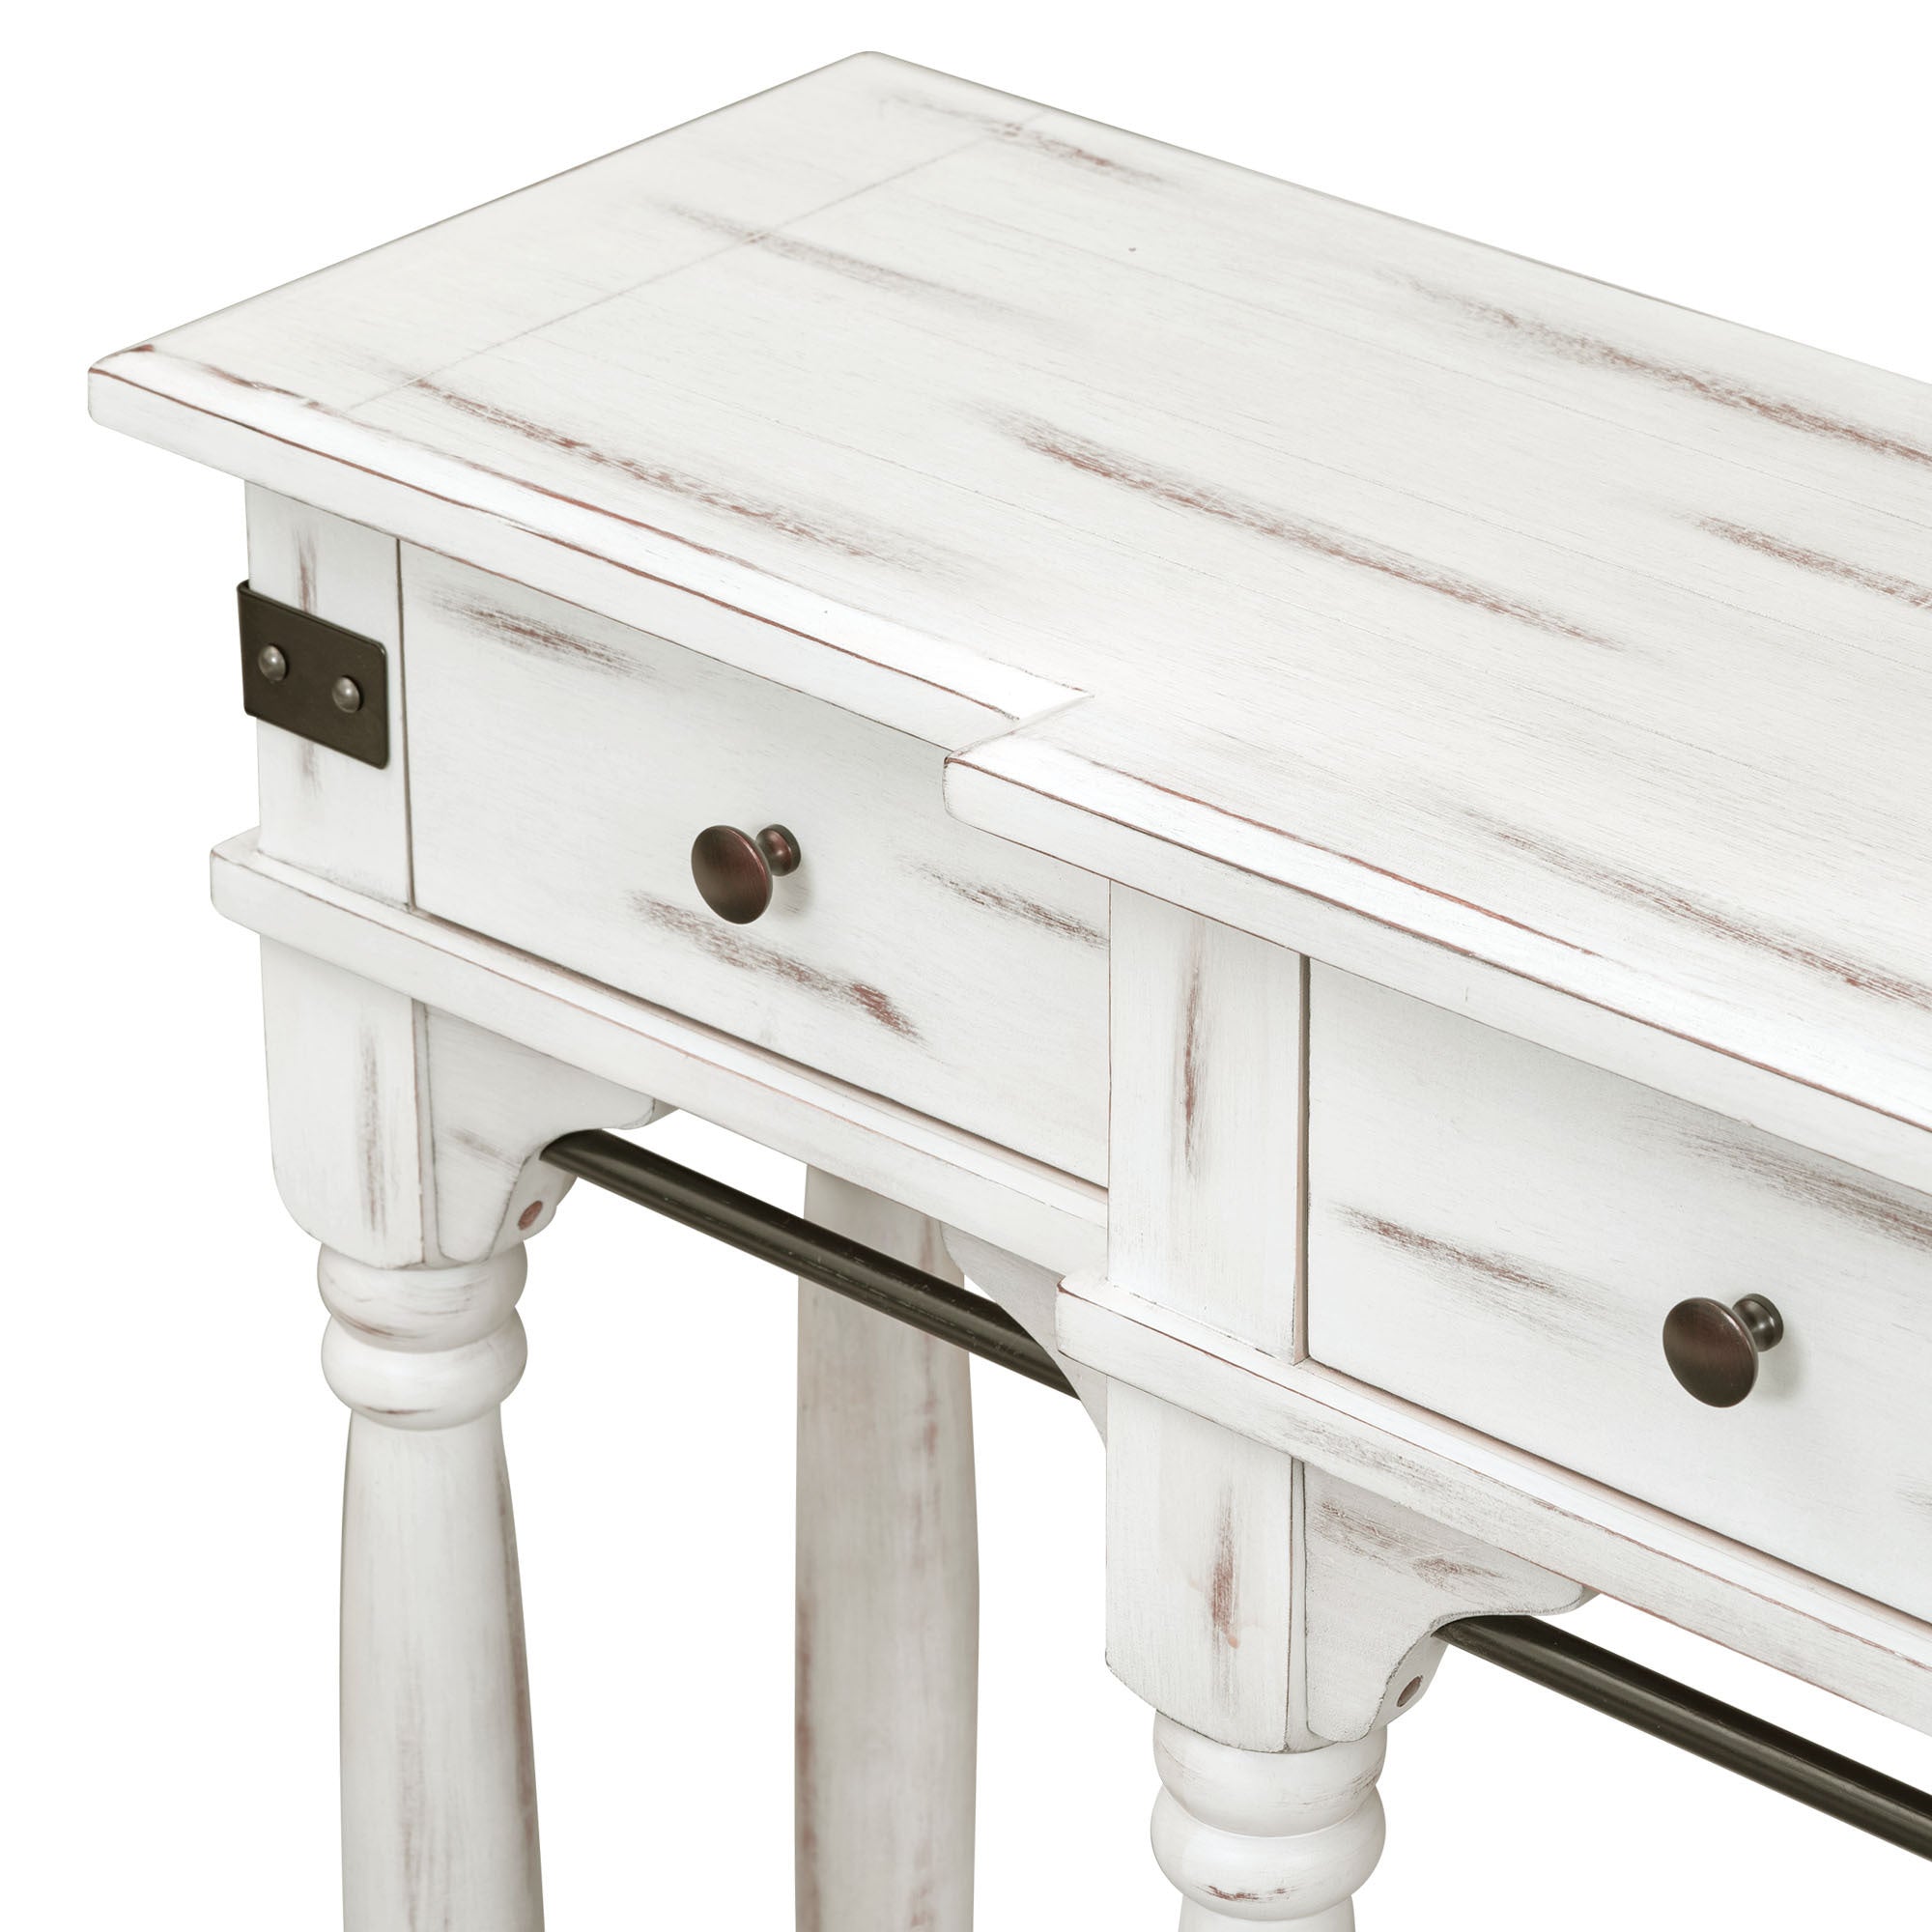 60" Retro style Console Table with Storage, Creamy white color